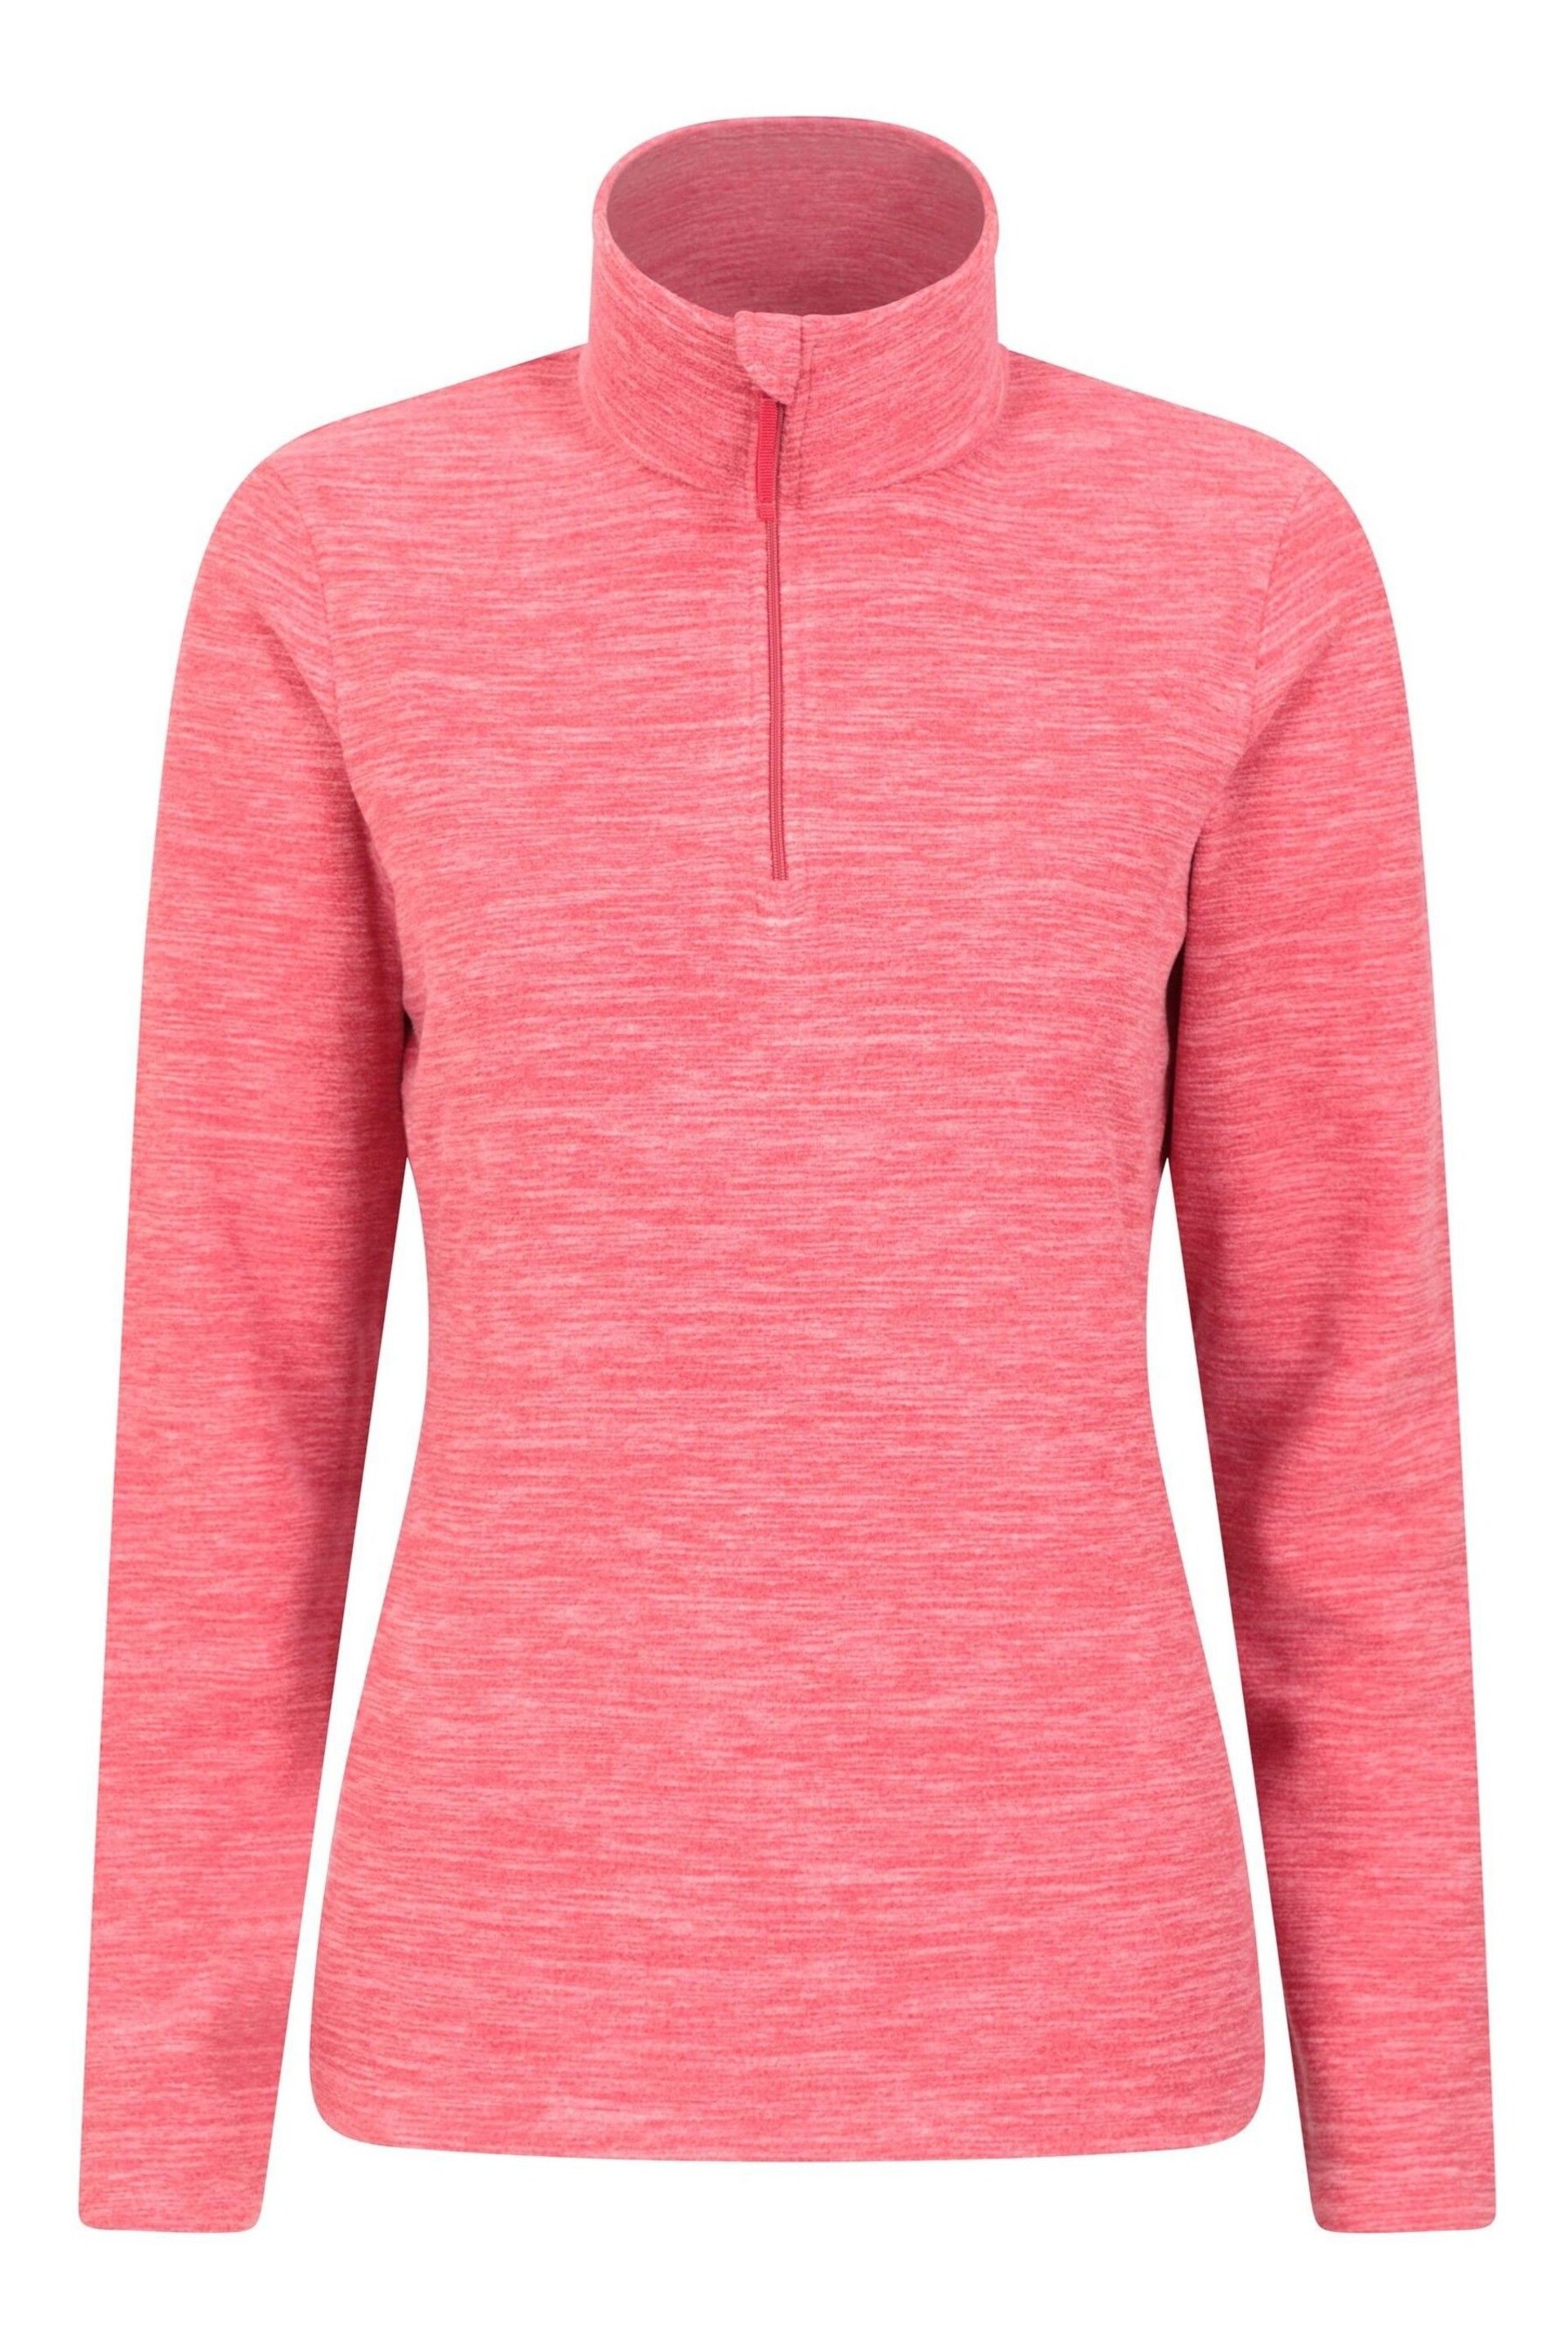 Mountain Warehouse Coral Pink Snowdon Melange Womens Half-Zip Fleece - Image 1 of 5